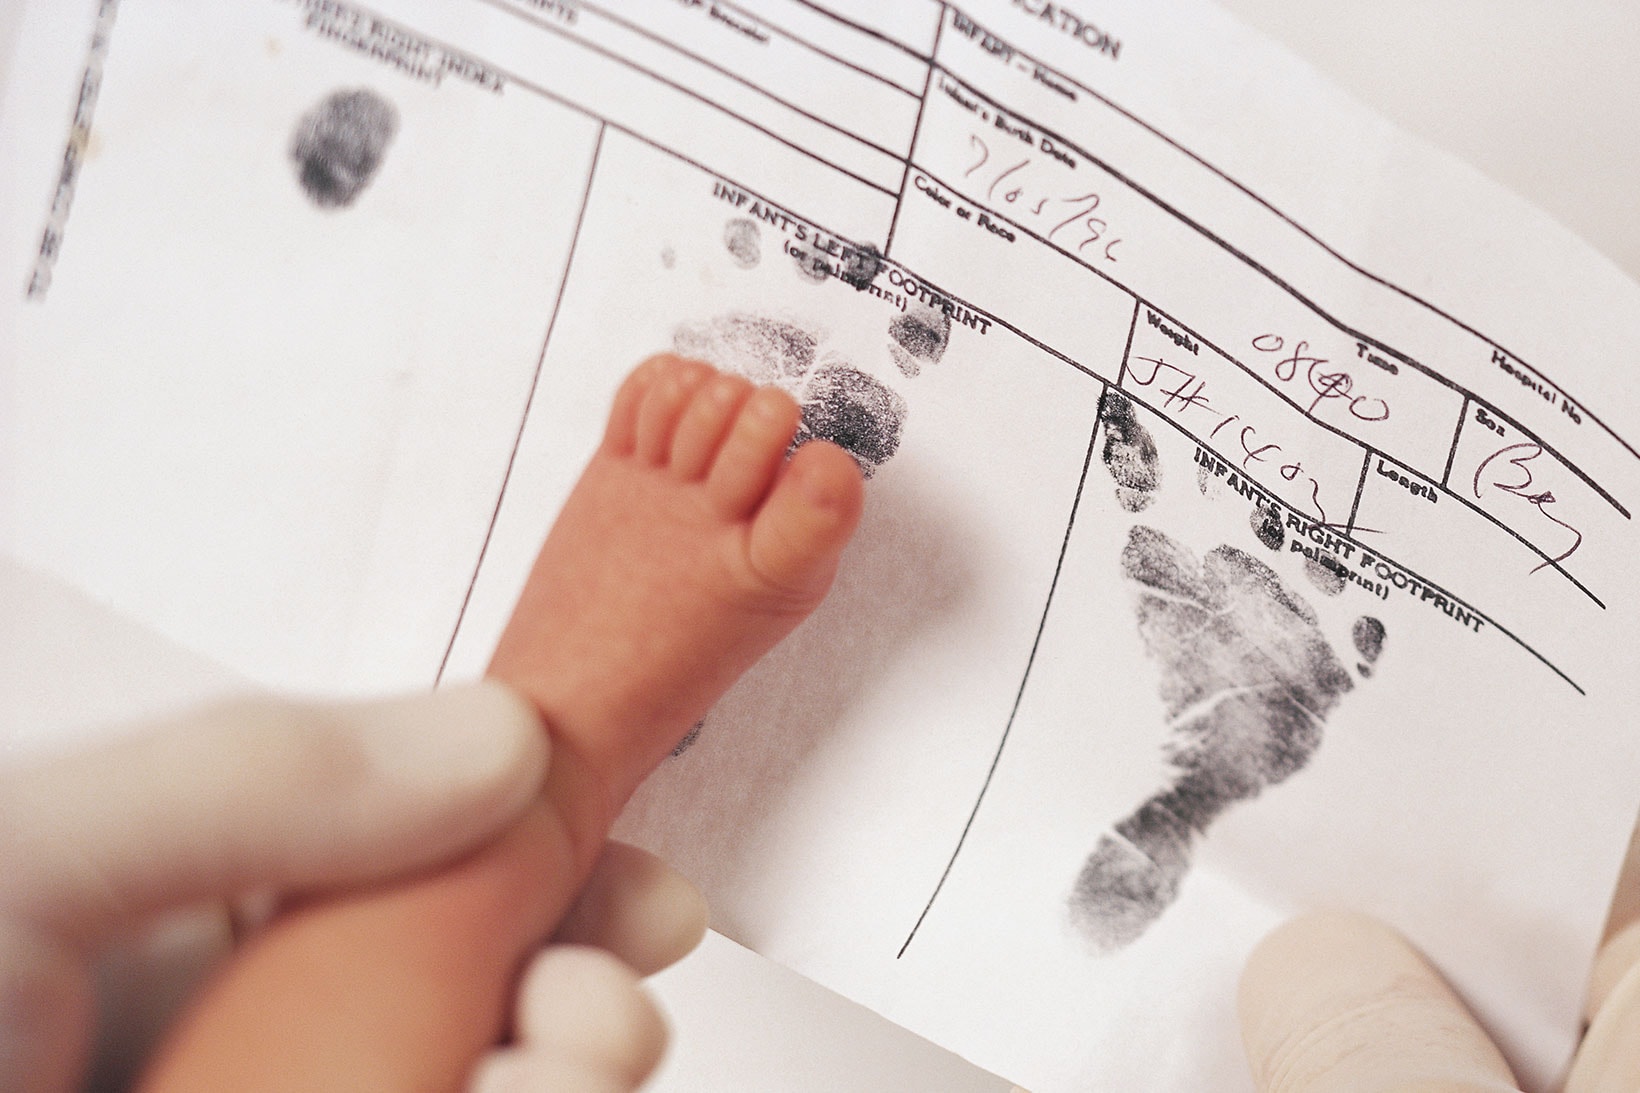 baby birth certificates remove sex designation american medical association ama info